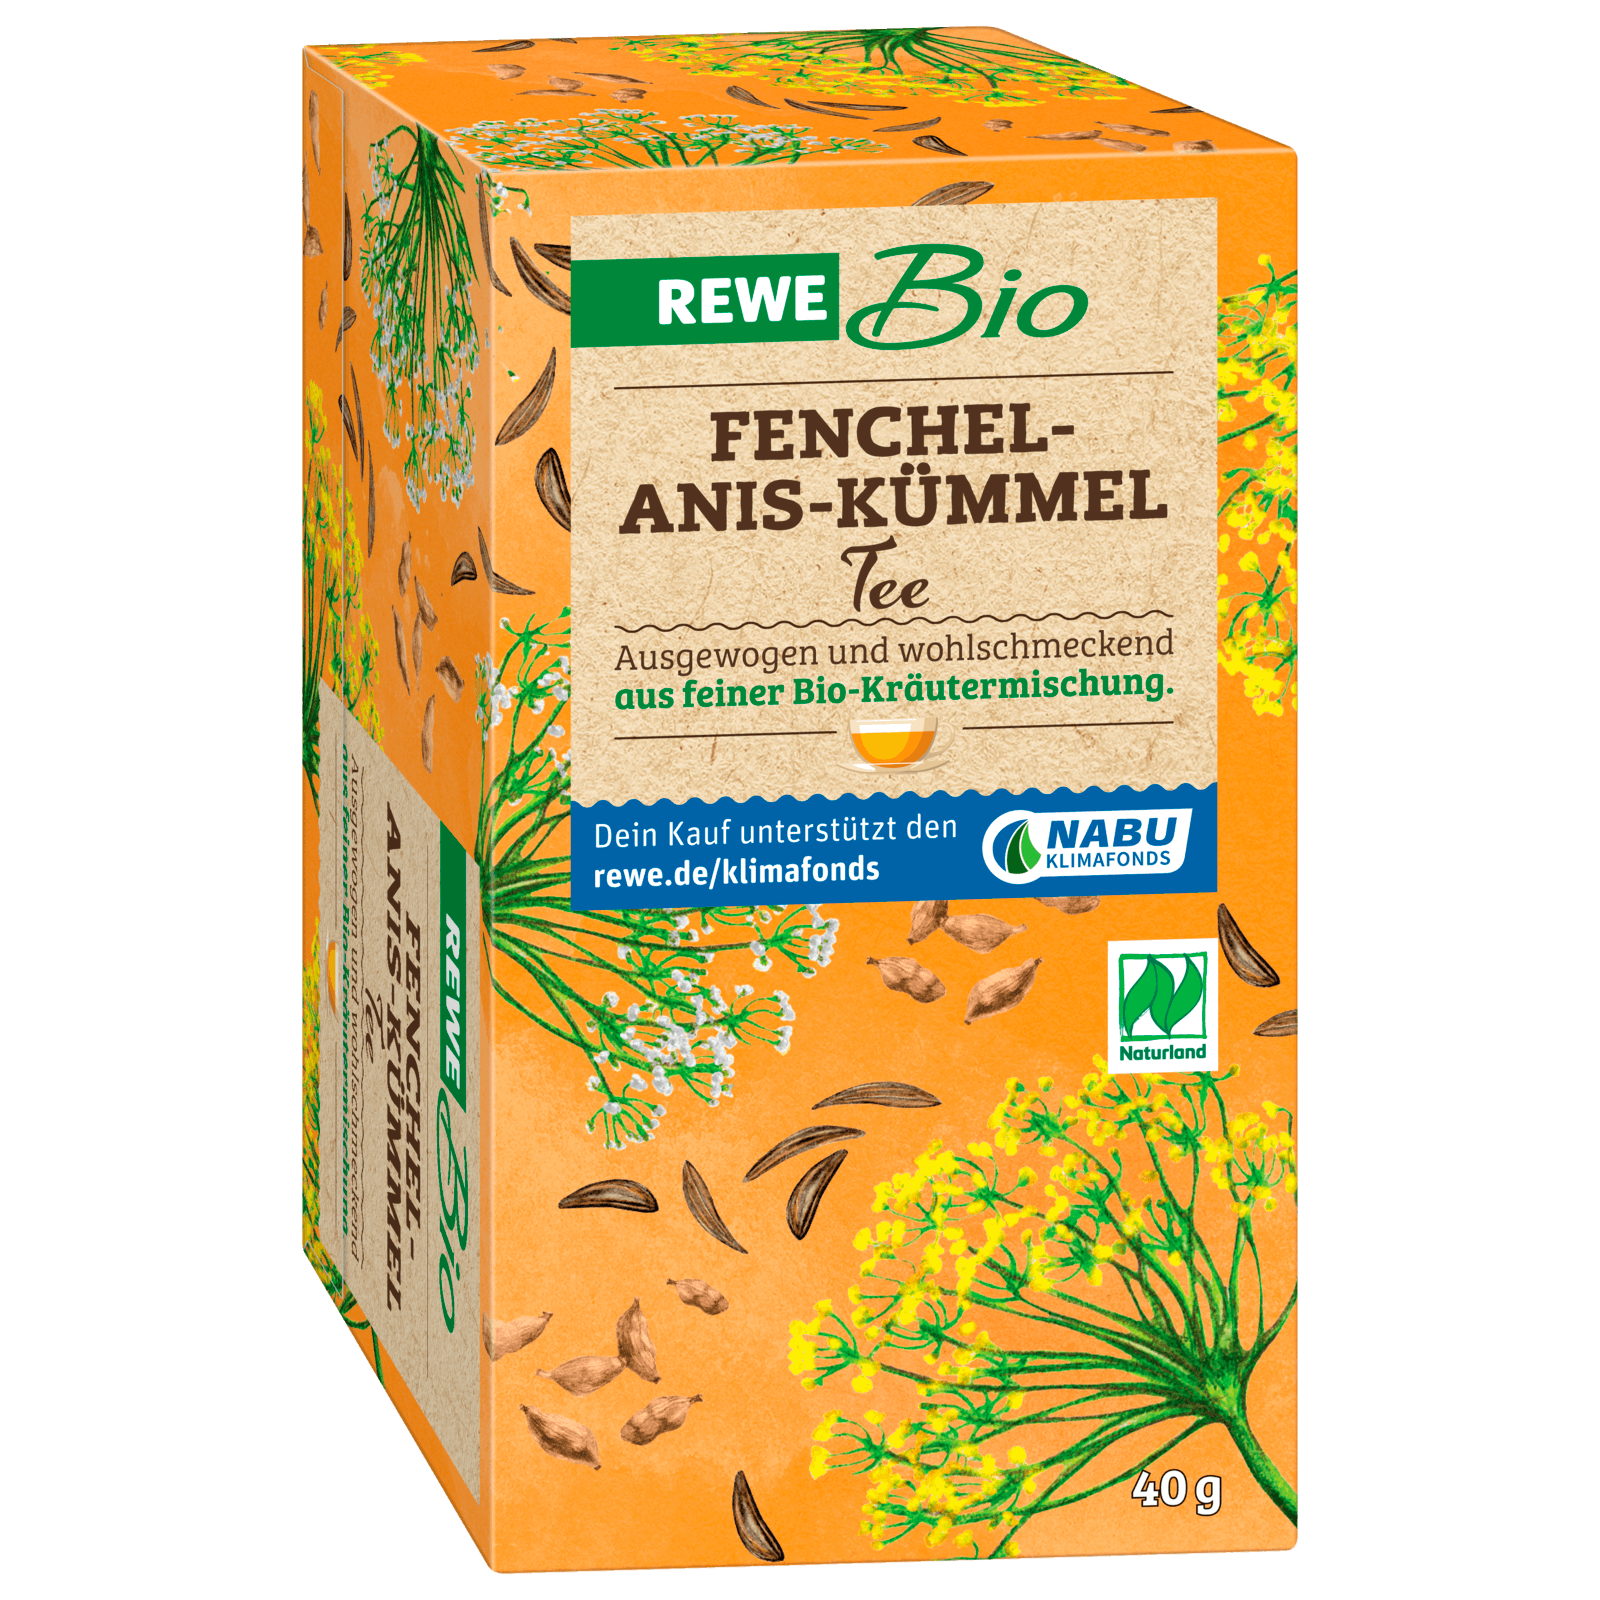 REWE Bio Fenchel-Anis-Kümmel Tee 40g